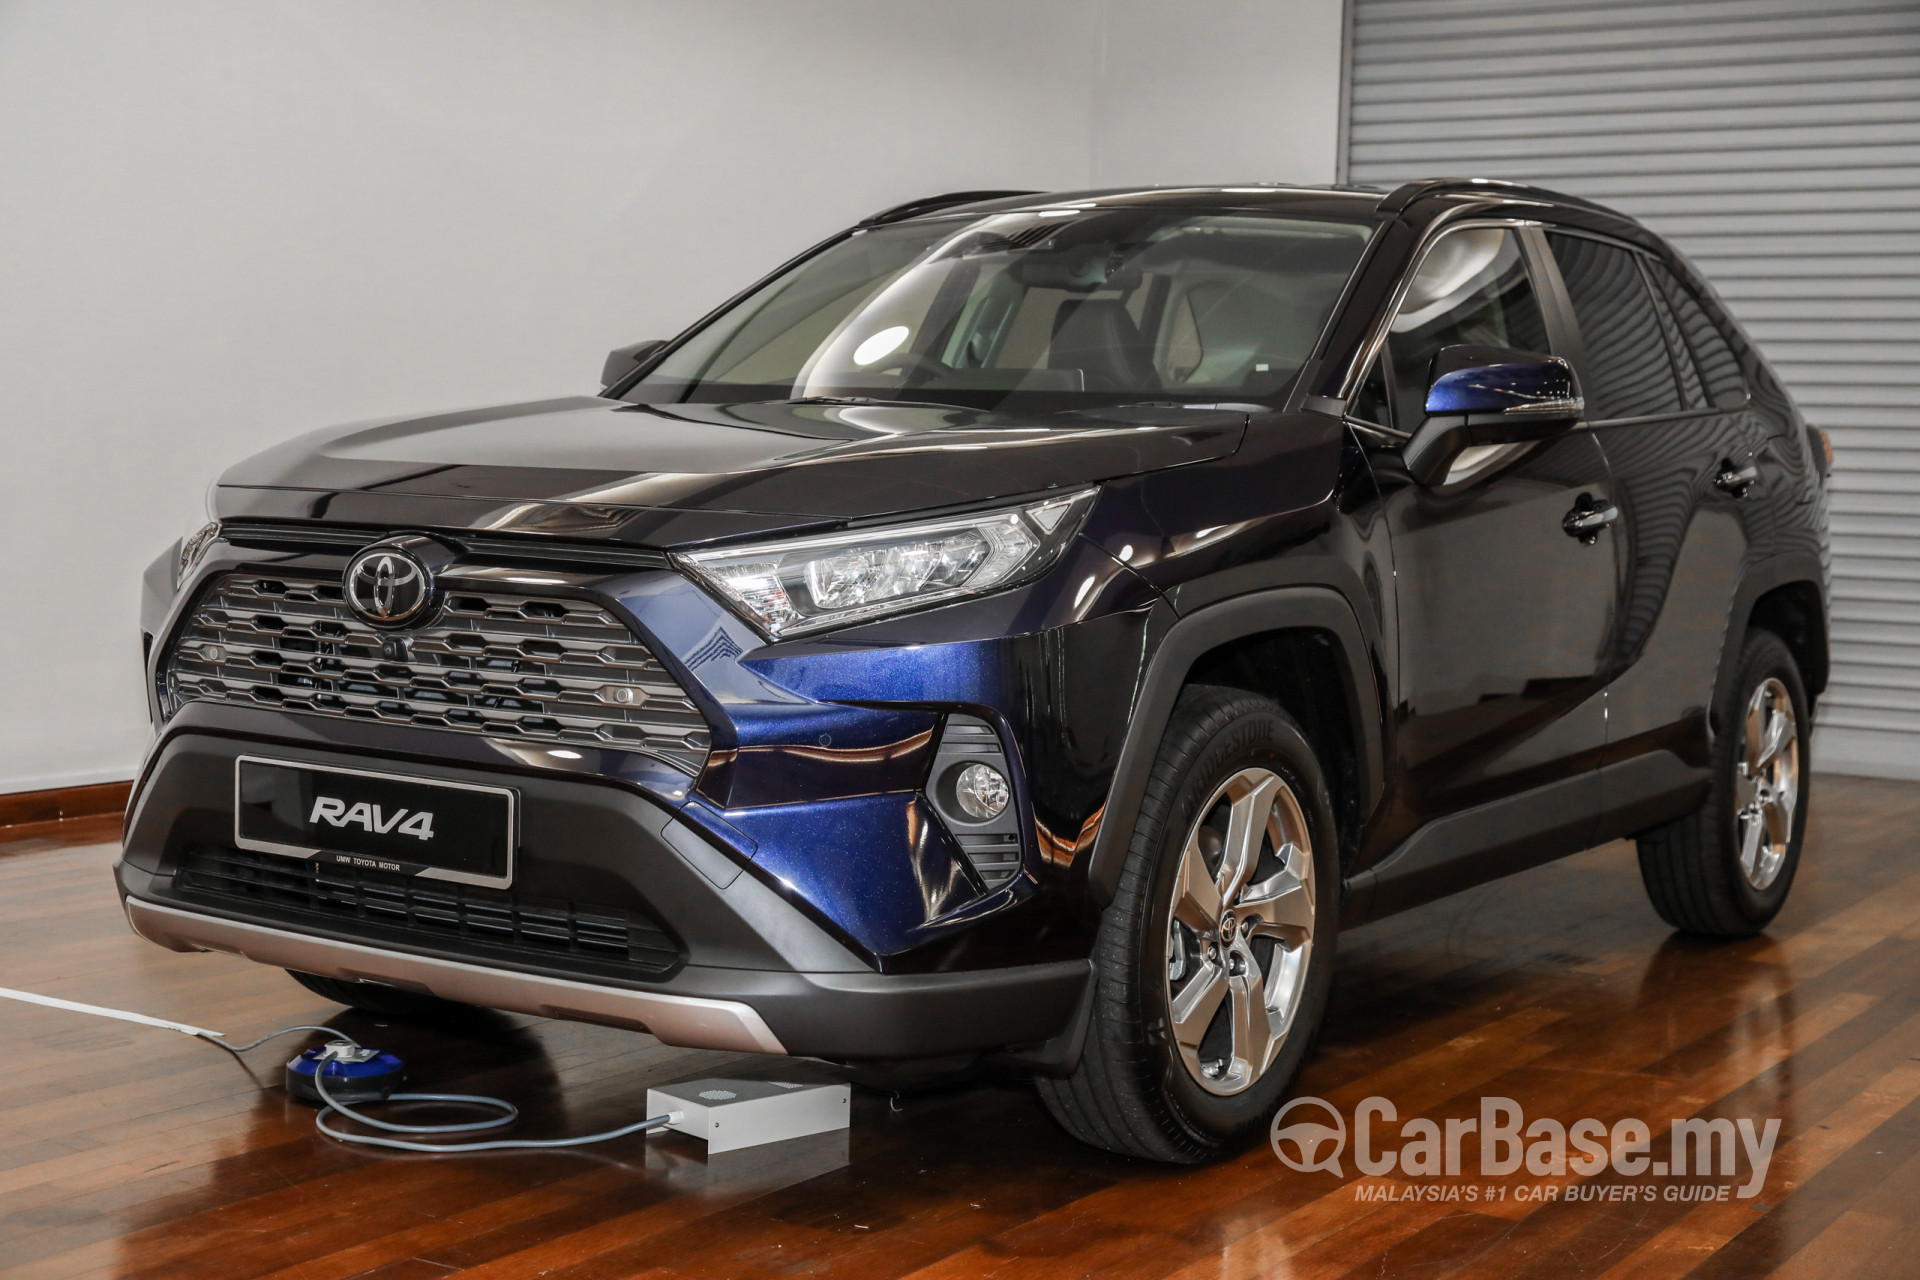 Toyota RAV4 XA50 (2020) Exterior Image in Malaysia - Reviews, Specs